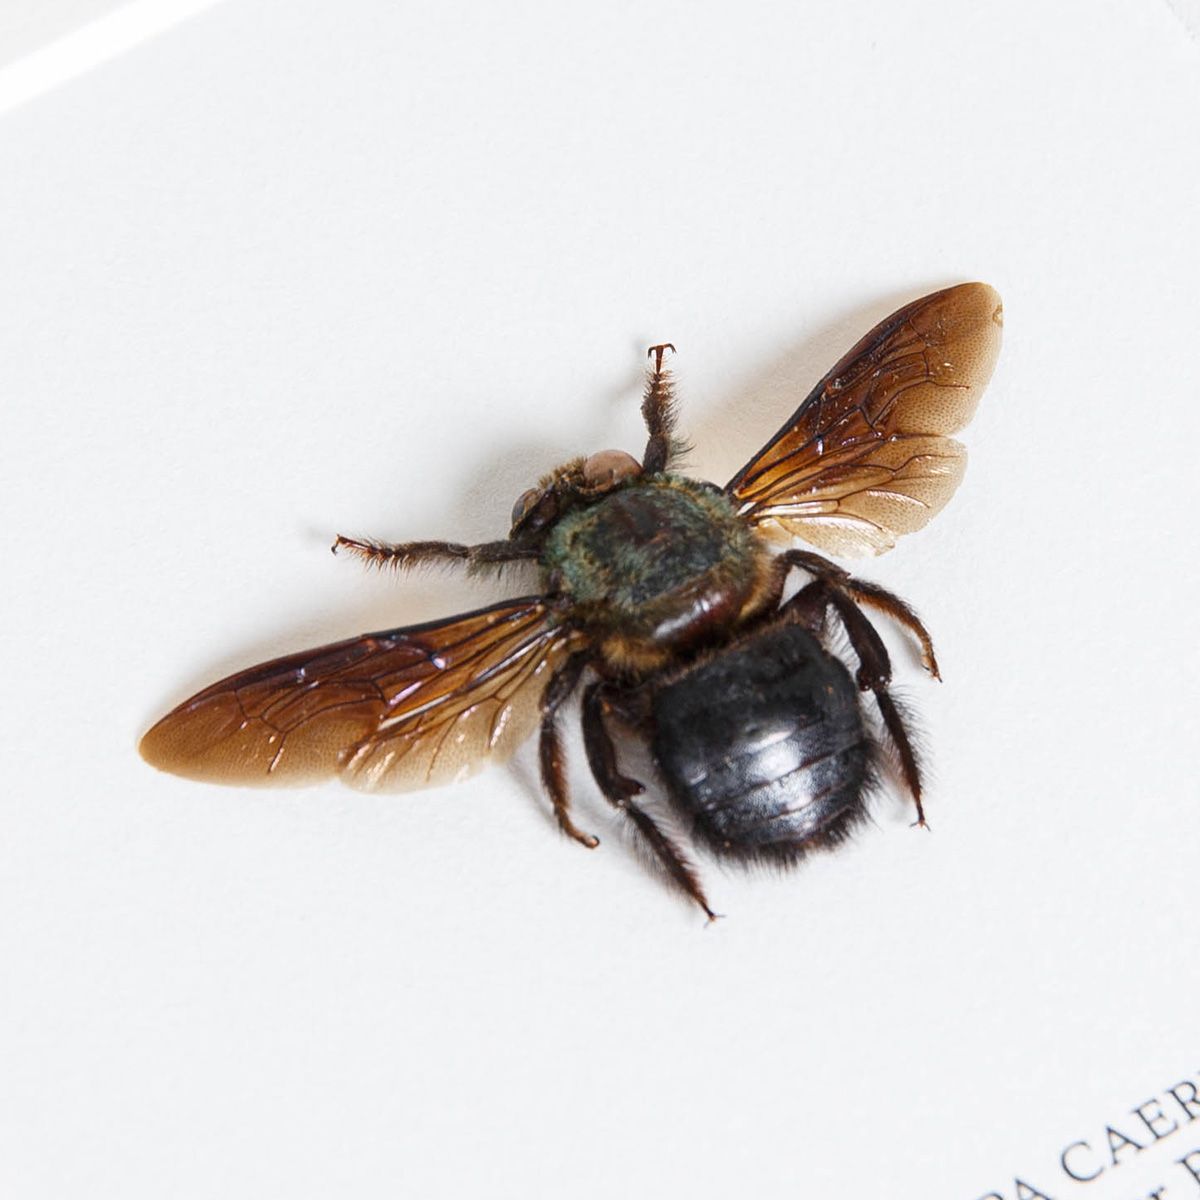 Carpenter Bee in Box Frame (Xylocopa caerulea)